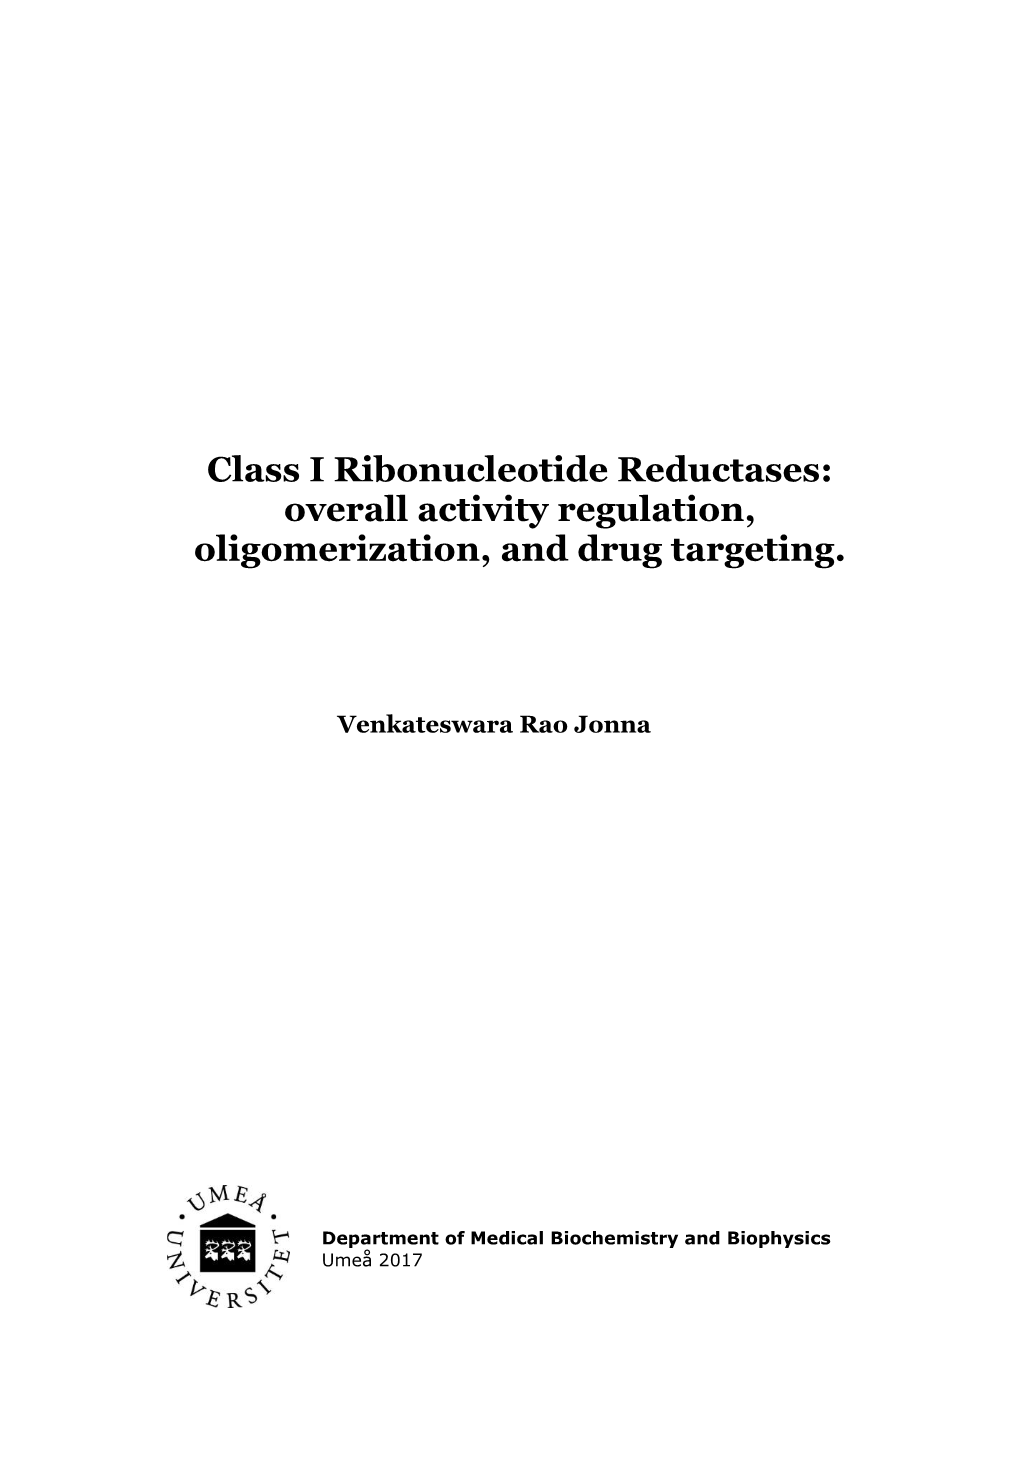 Class I Ribonucleotide Reductases: Overall Activity Regulation, Oligomerization, and Drug Targeting